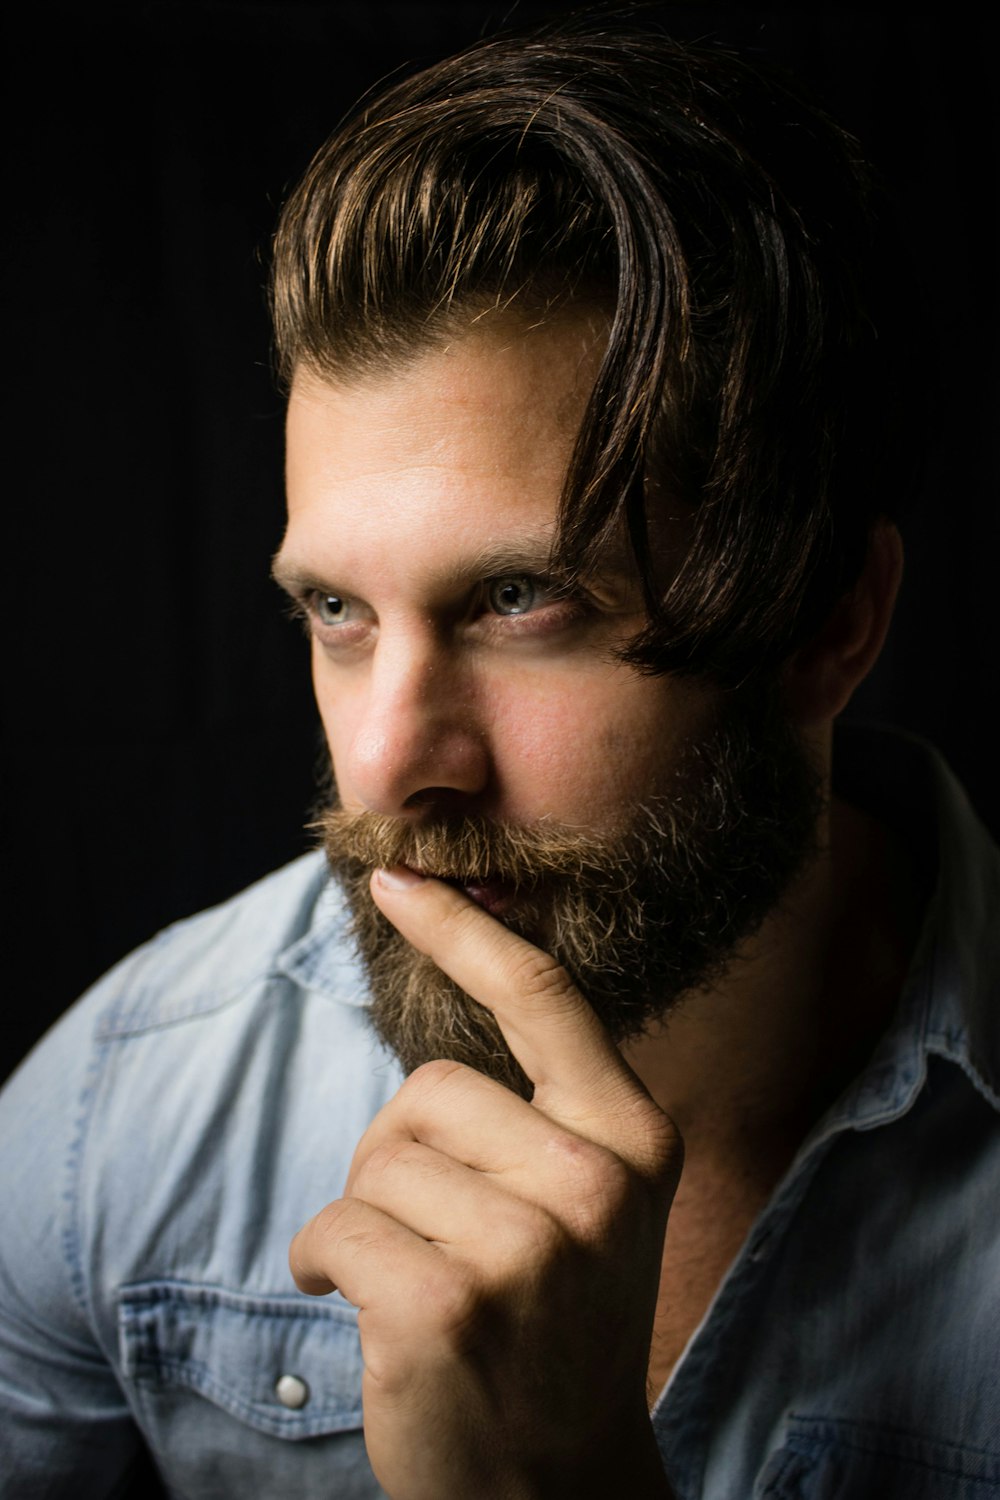 Wanna Long Beard? Try These Tips To Grow A Long Beard